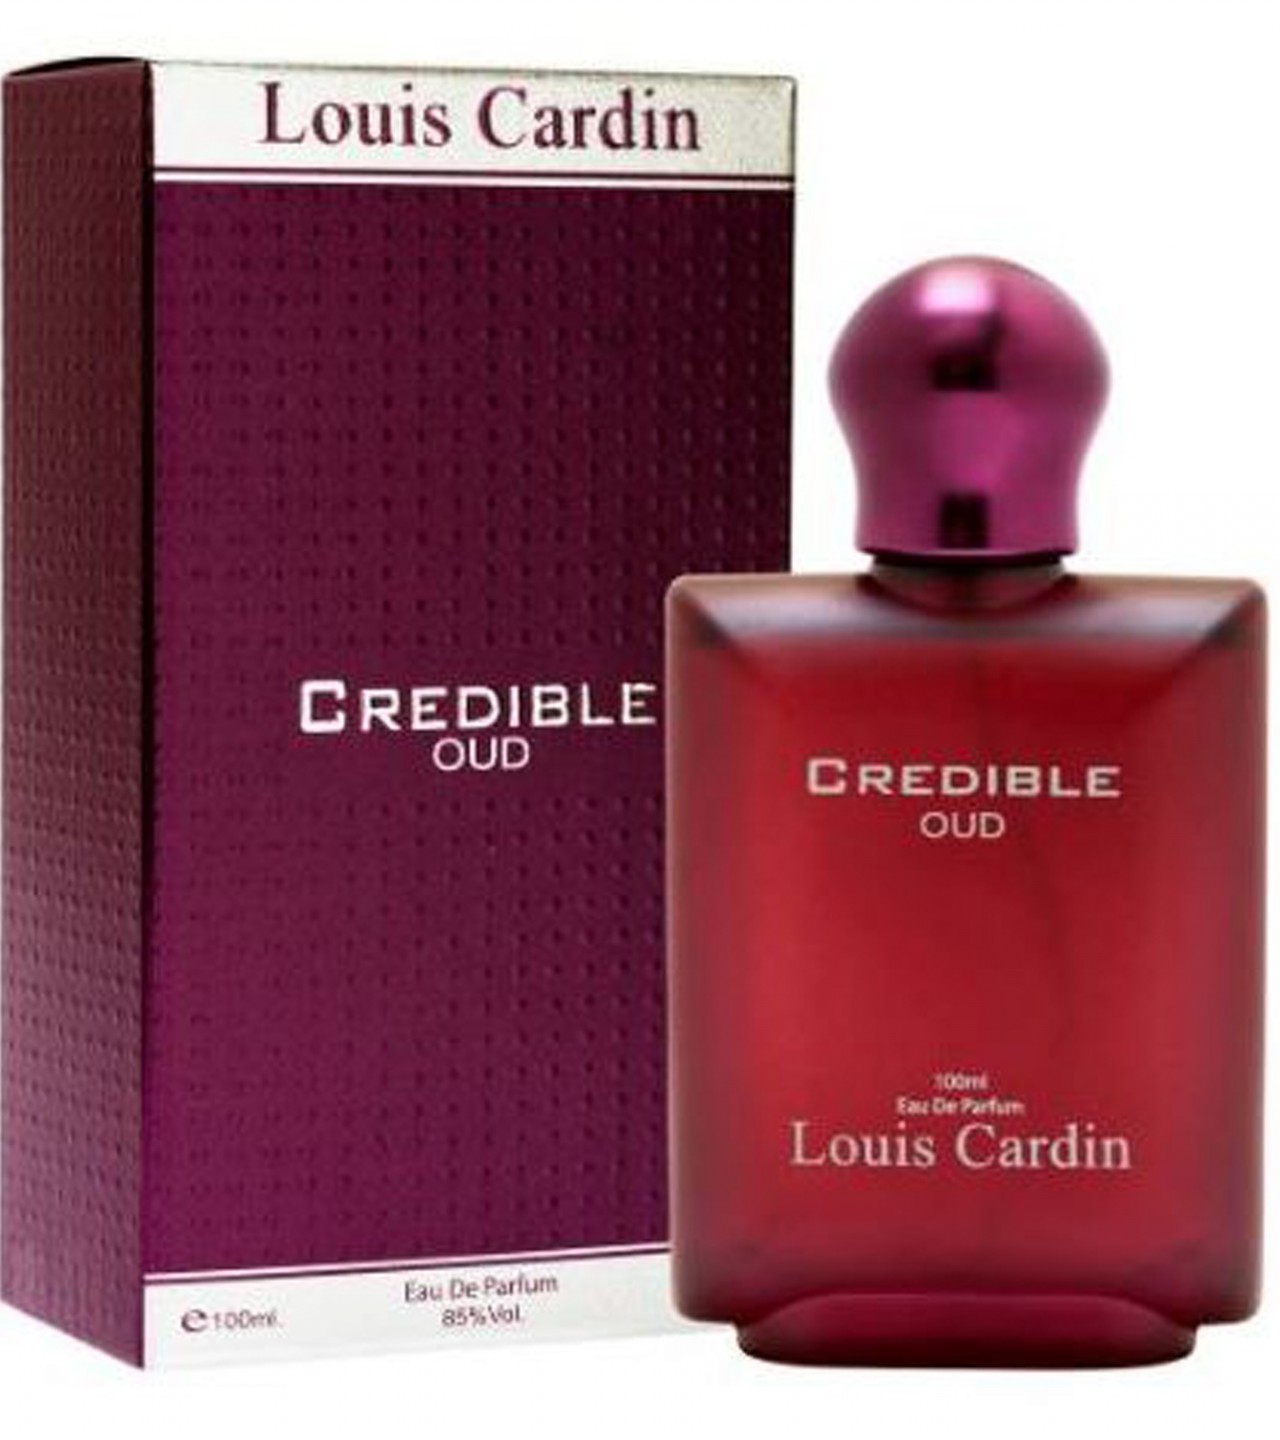 Louis Cardin Credible Oud Perfume For Men - 100 ml